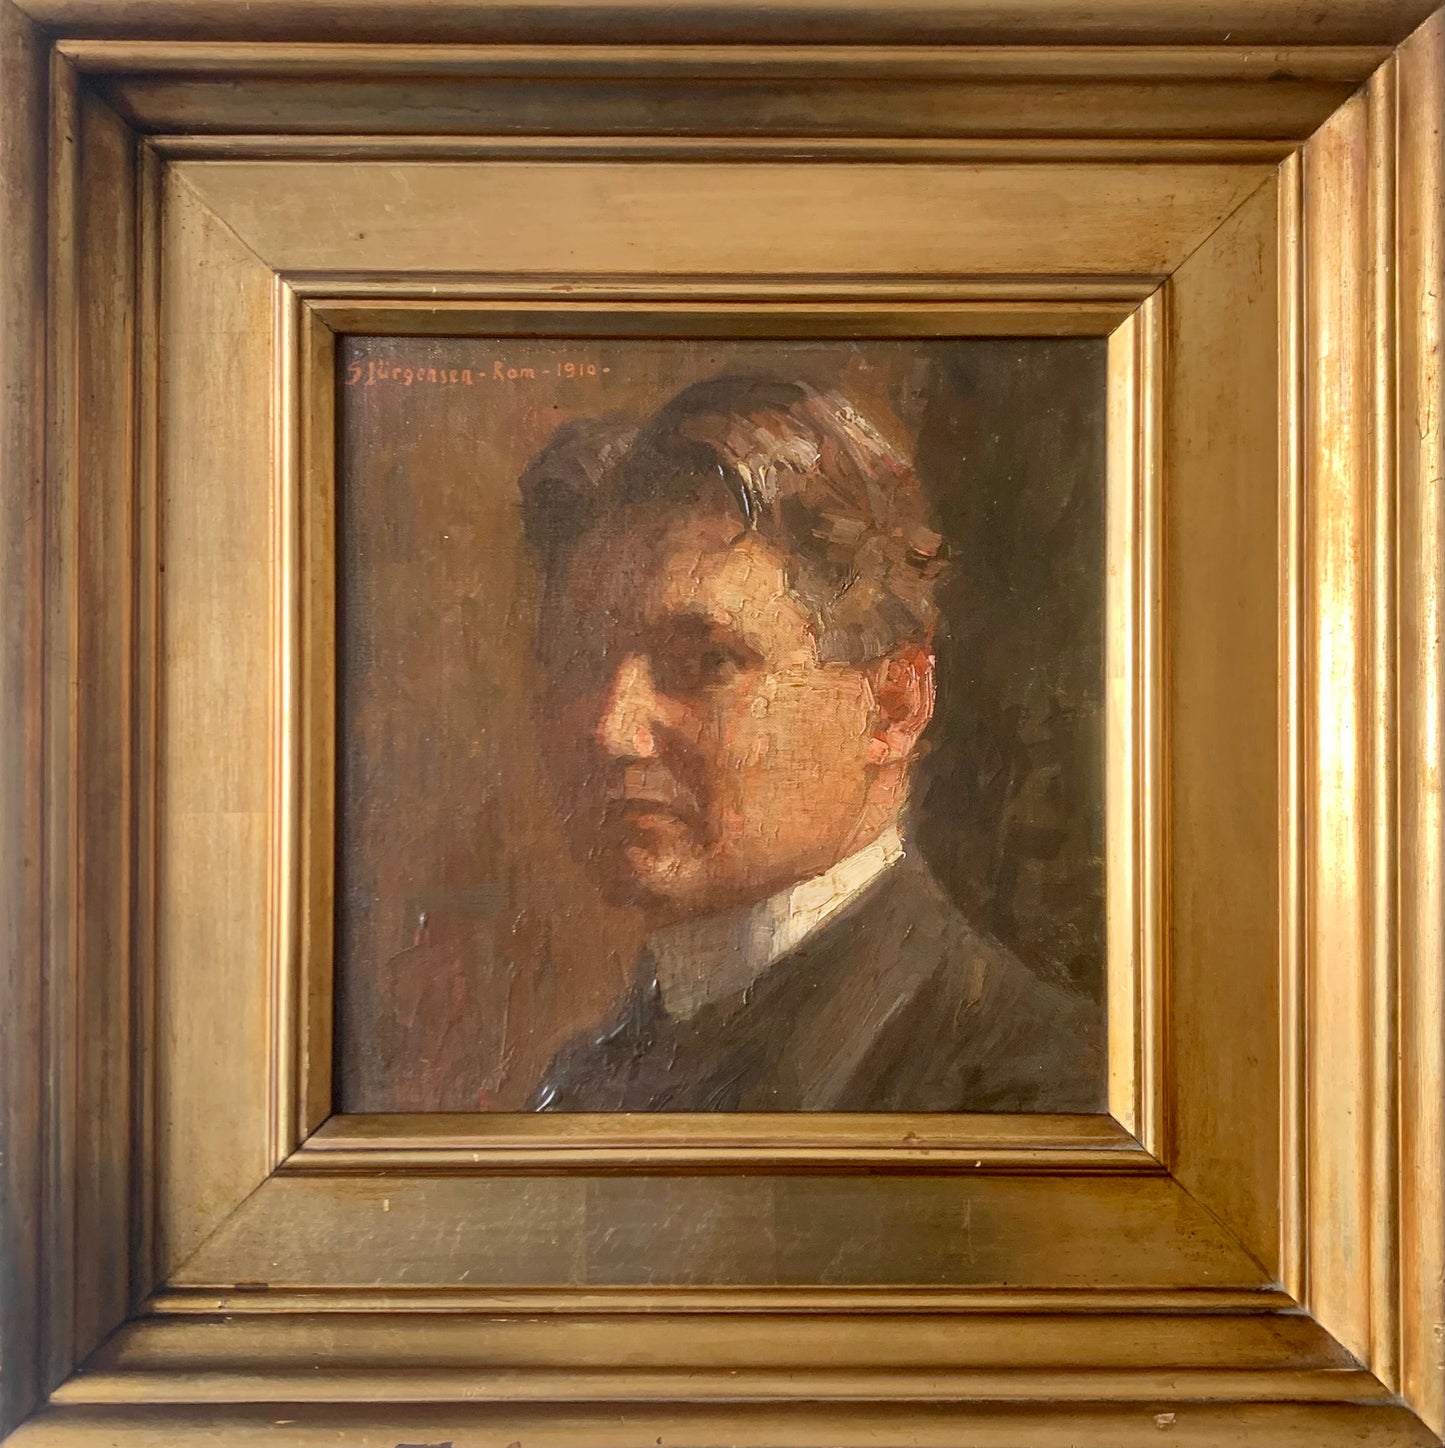 Sophus Jürgensen. The artists selfportrait, Rome, 1910